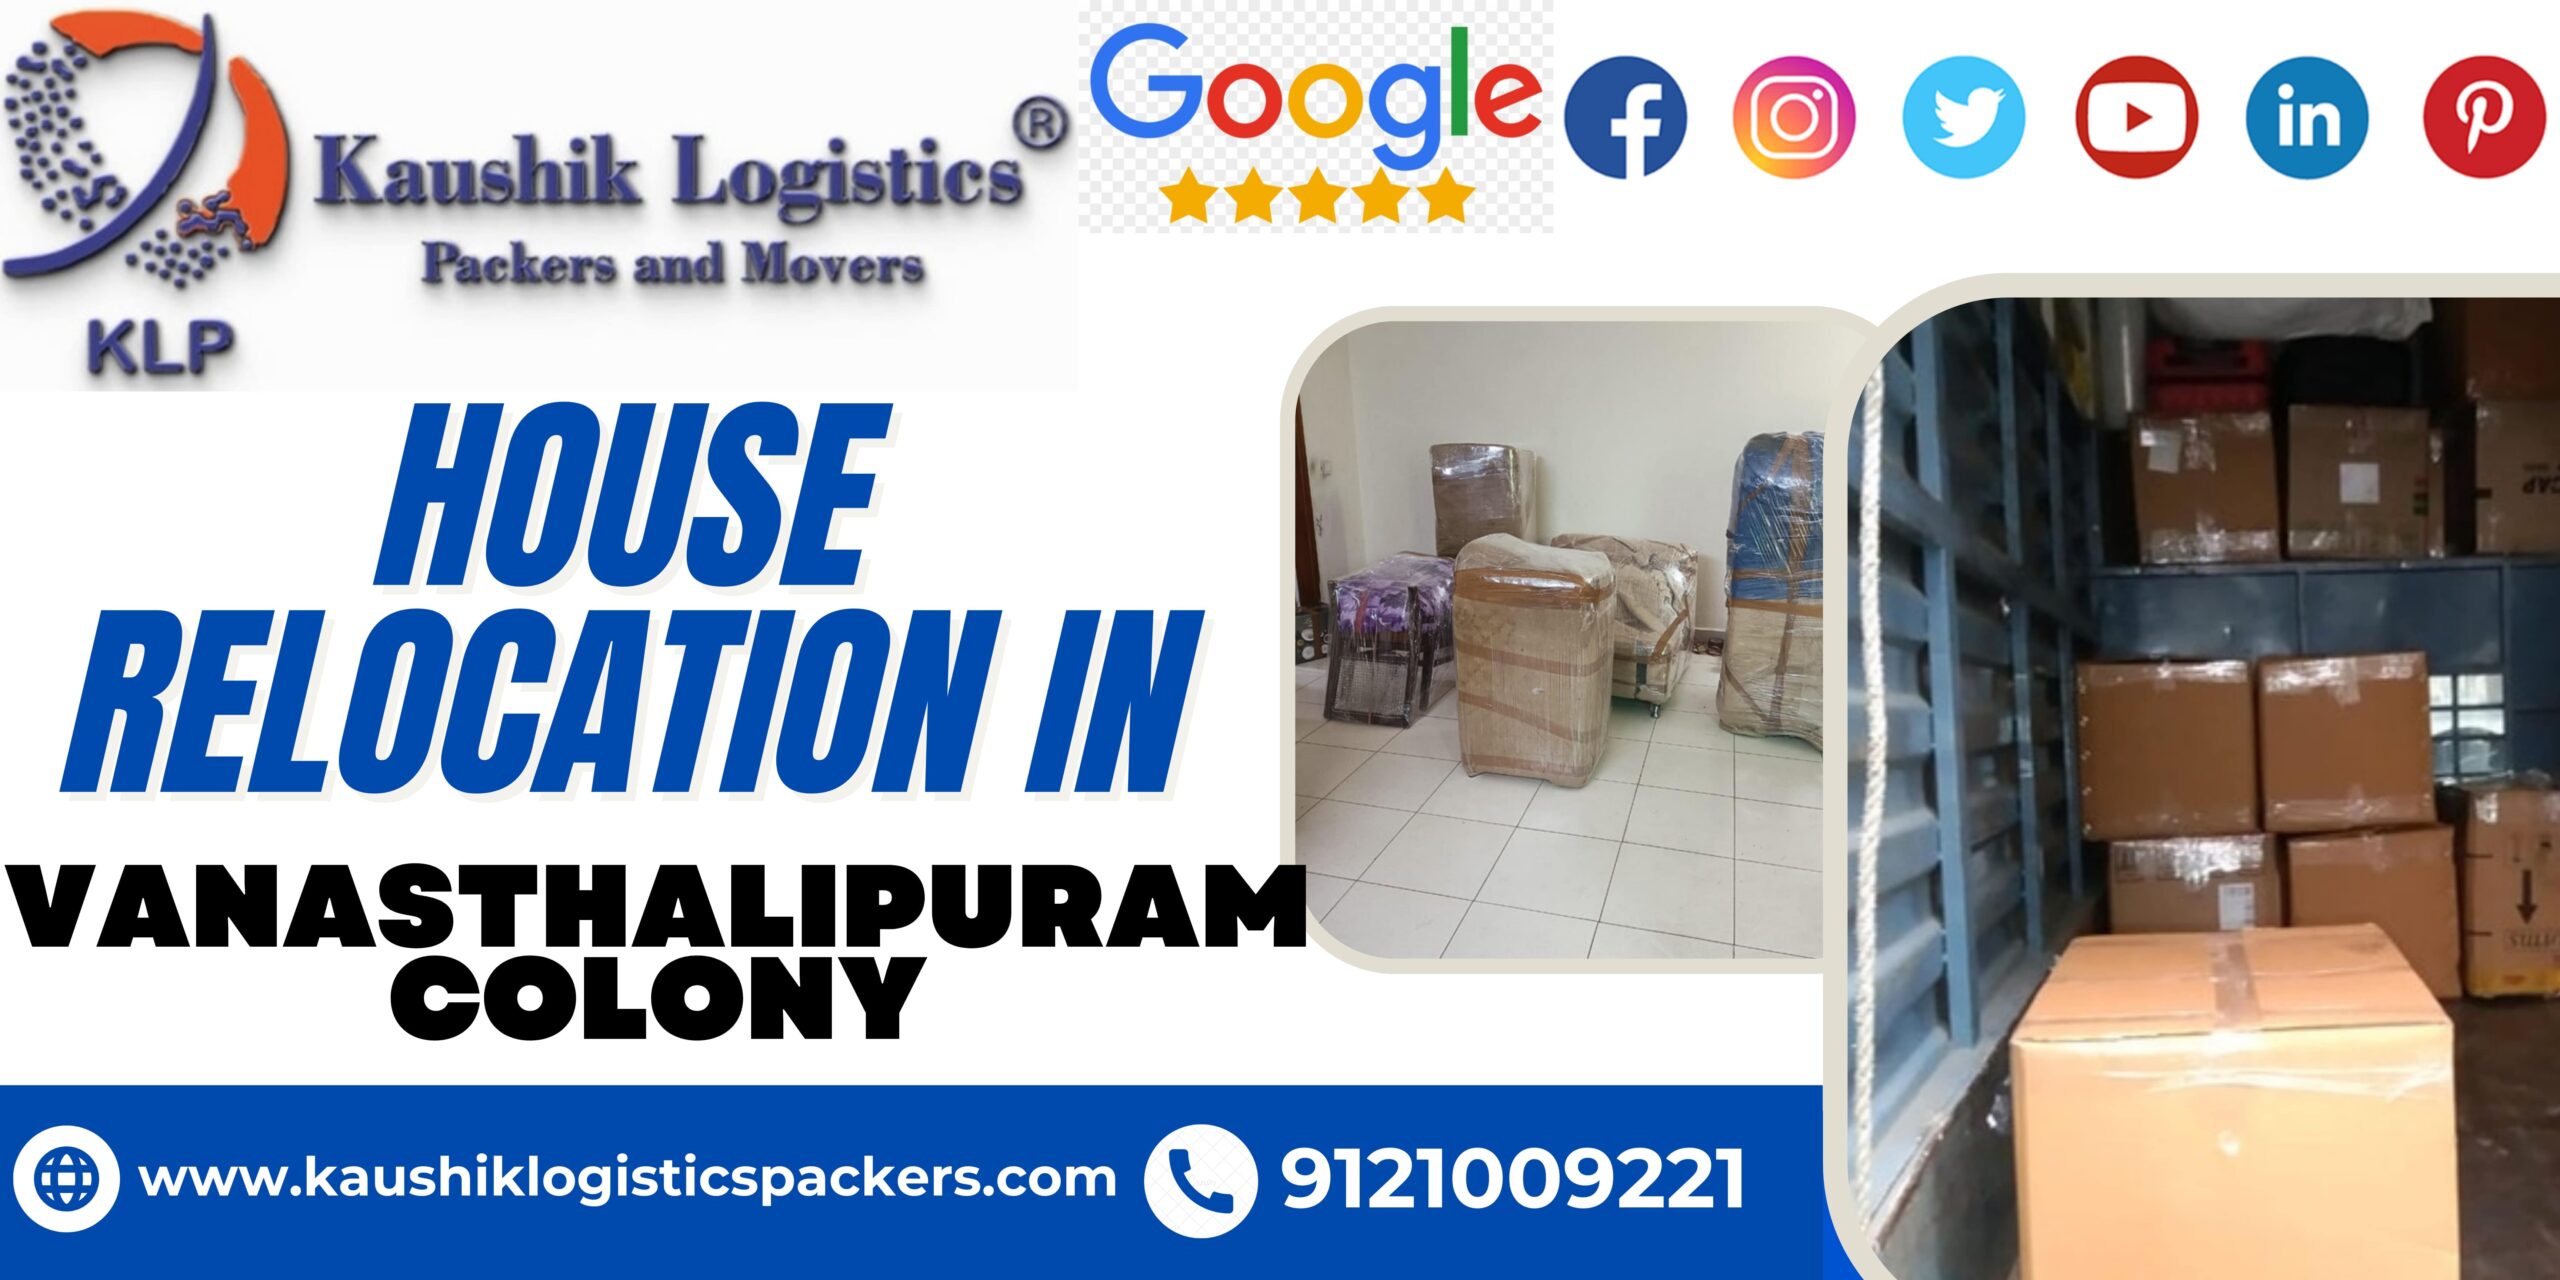 Packers and Movers In Vanasthalipuram Colony